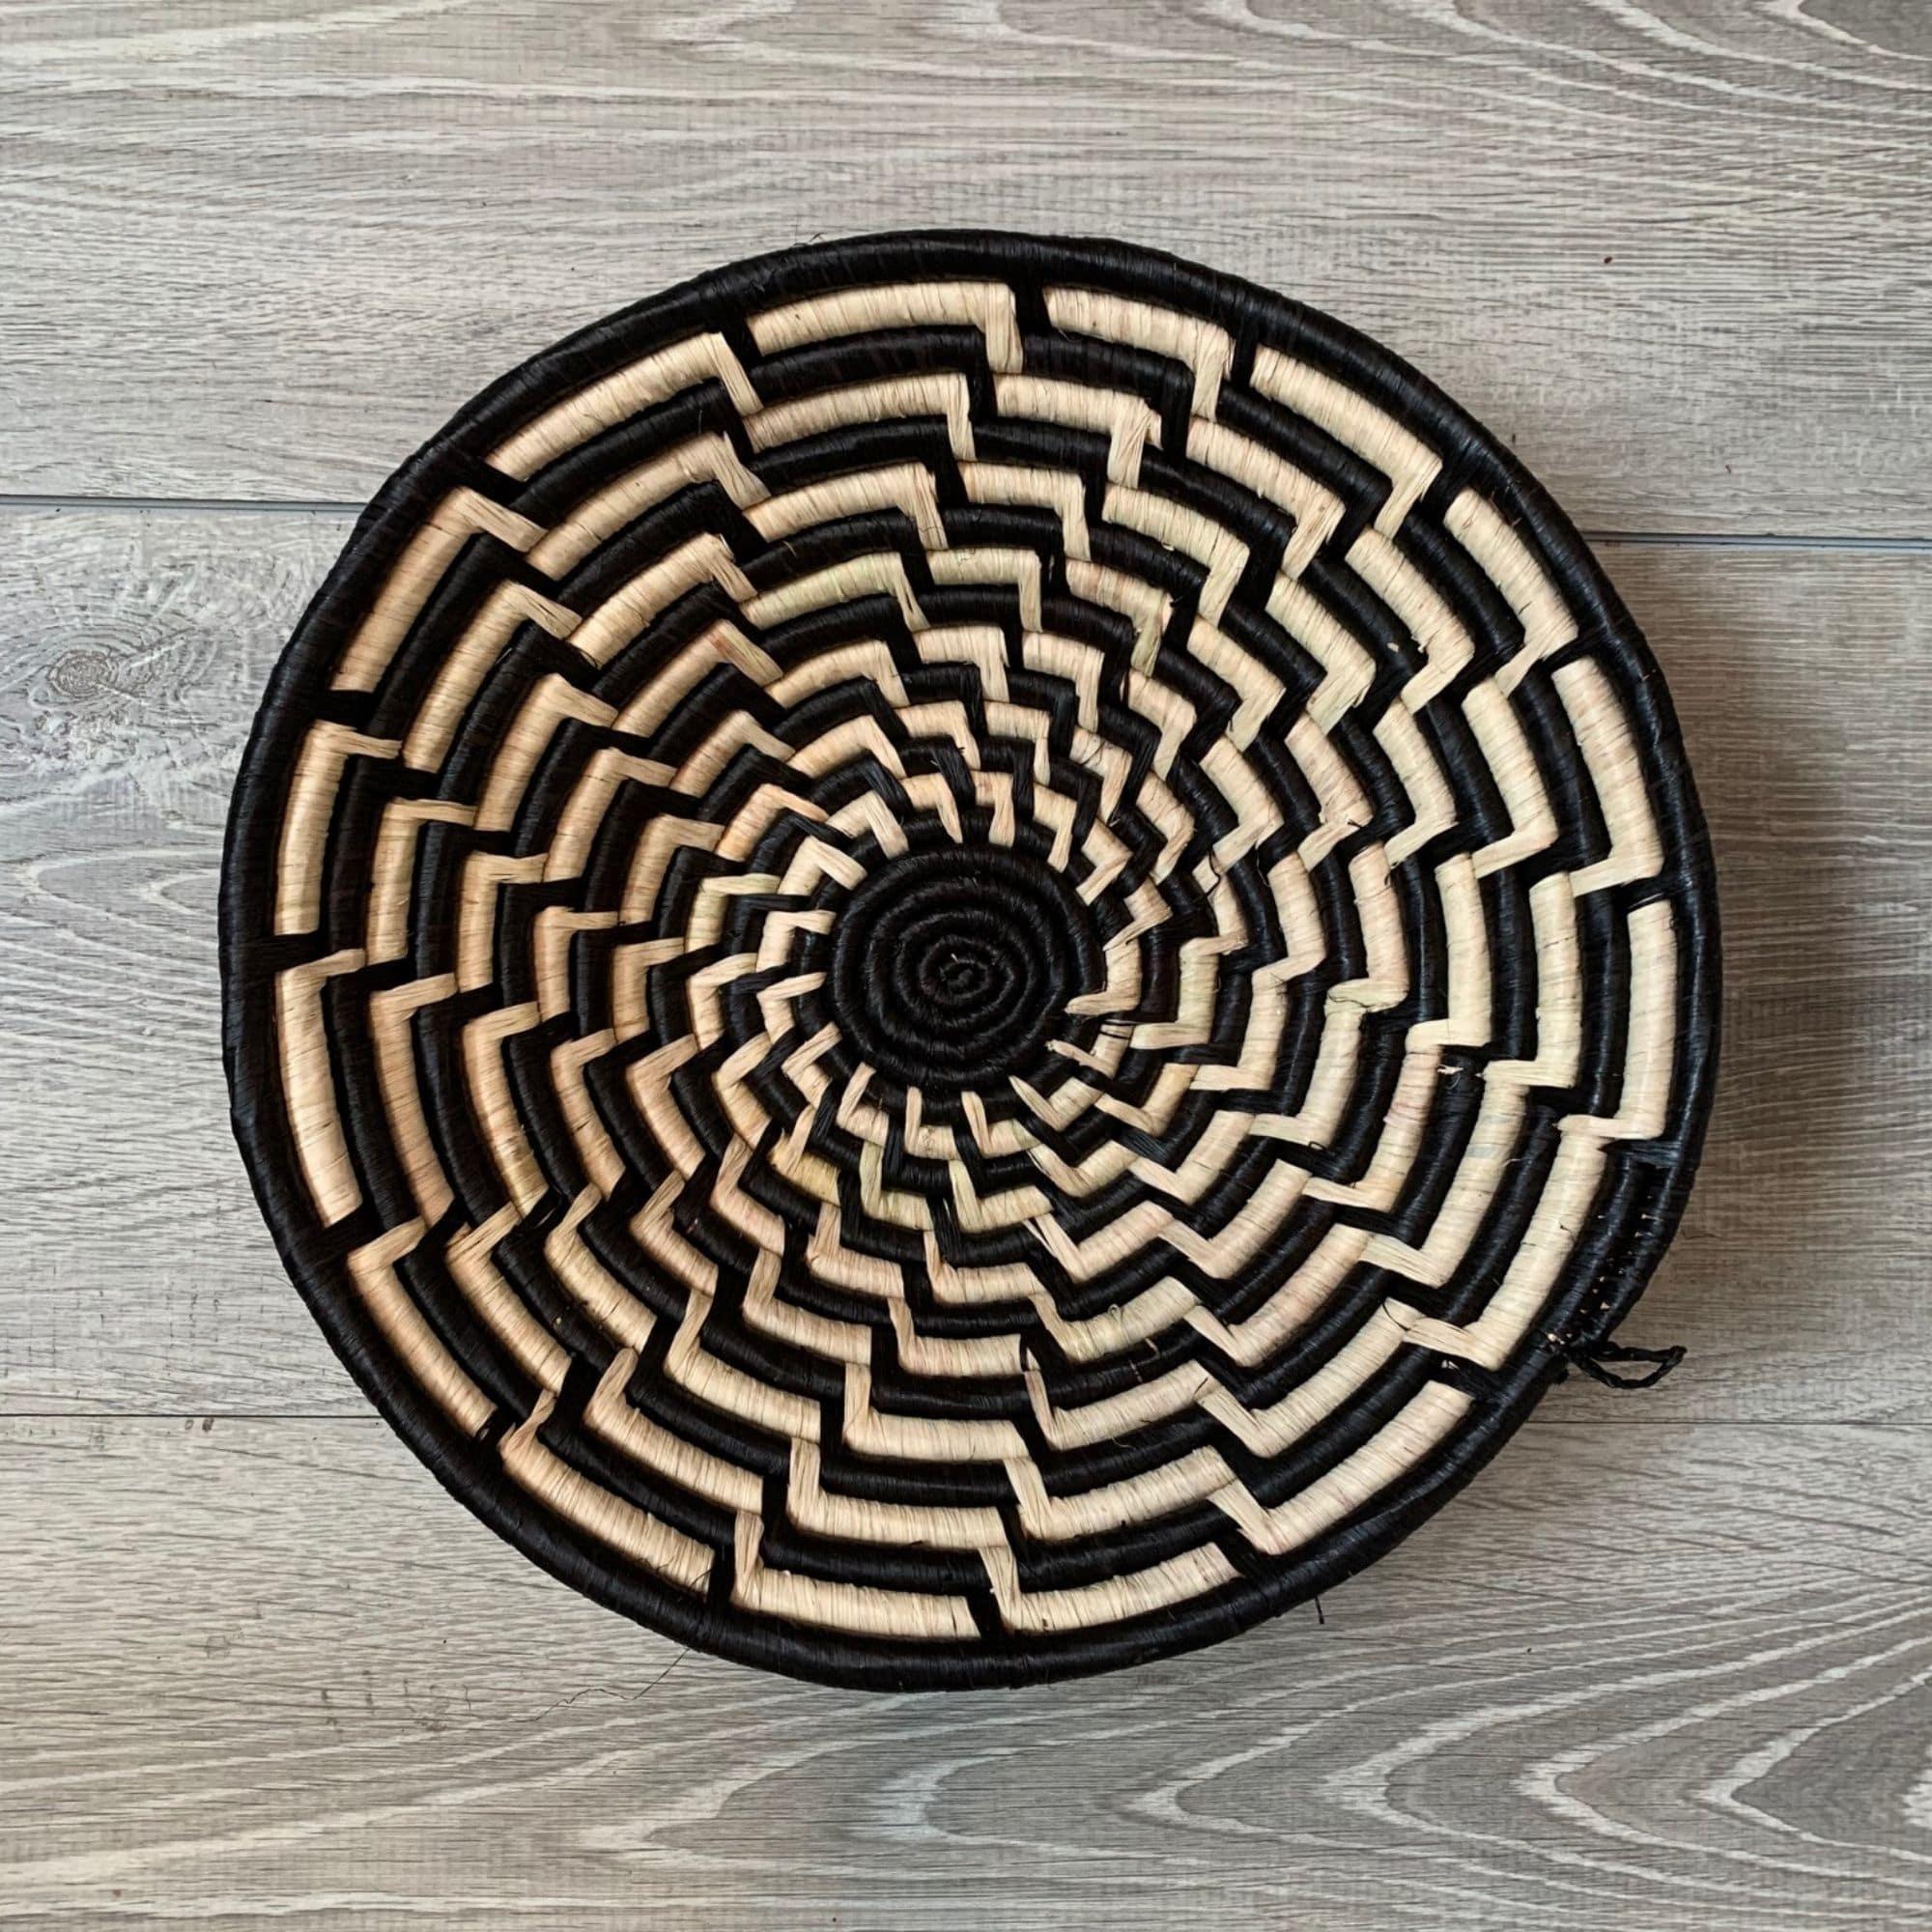 Woven Sisal Basket, Feathered Monochrome Pattern - Flyclothing LLC